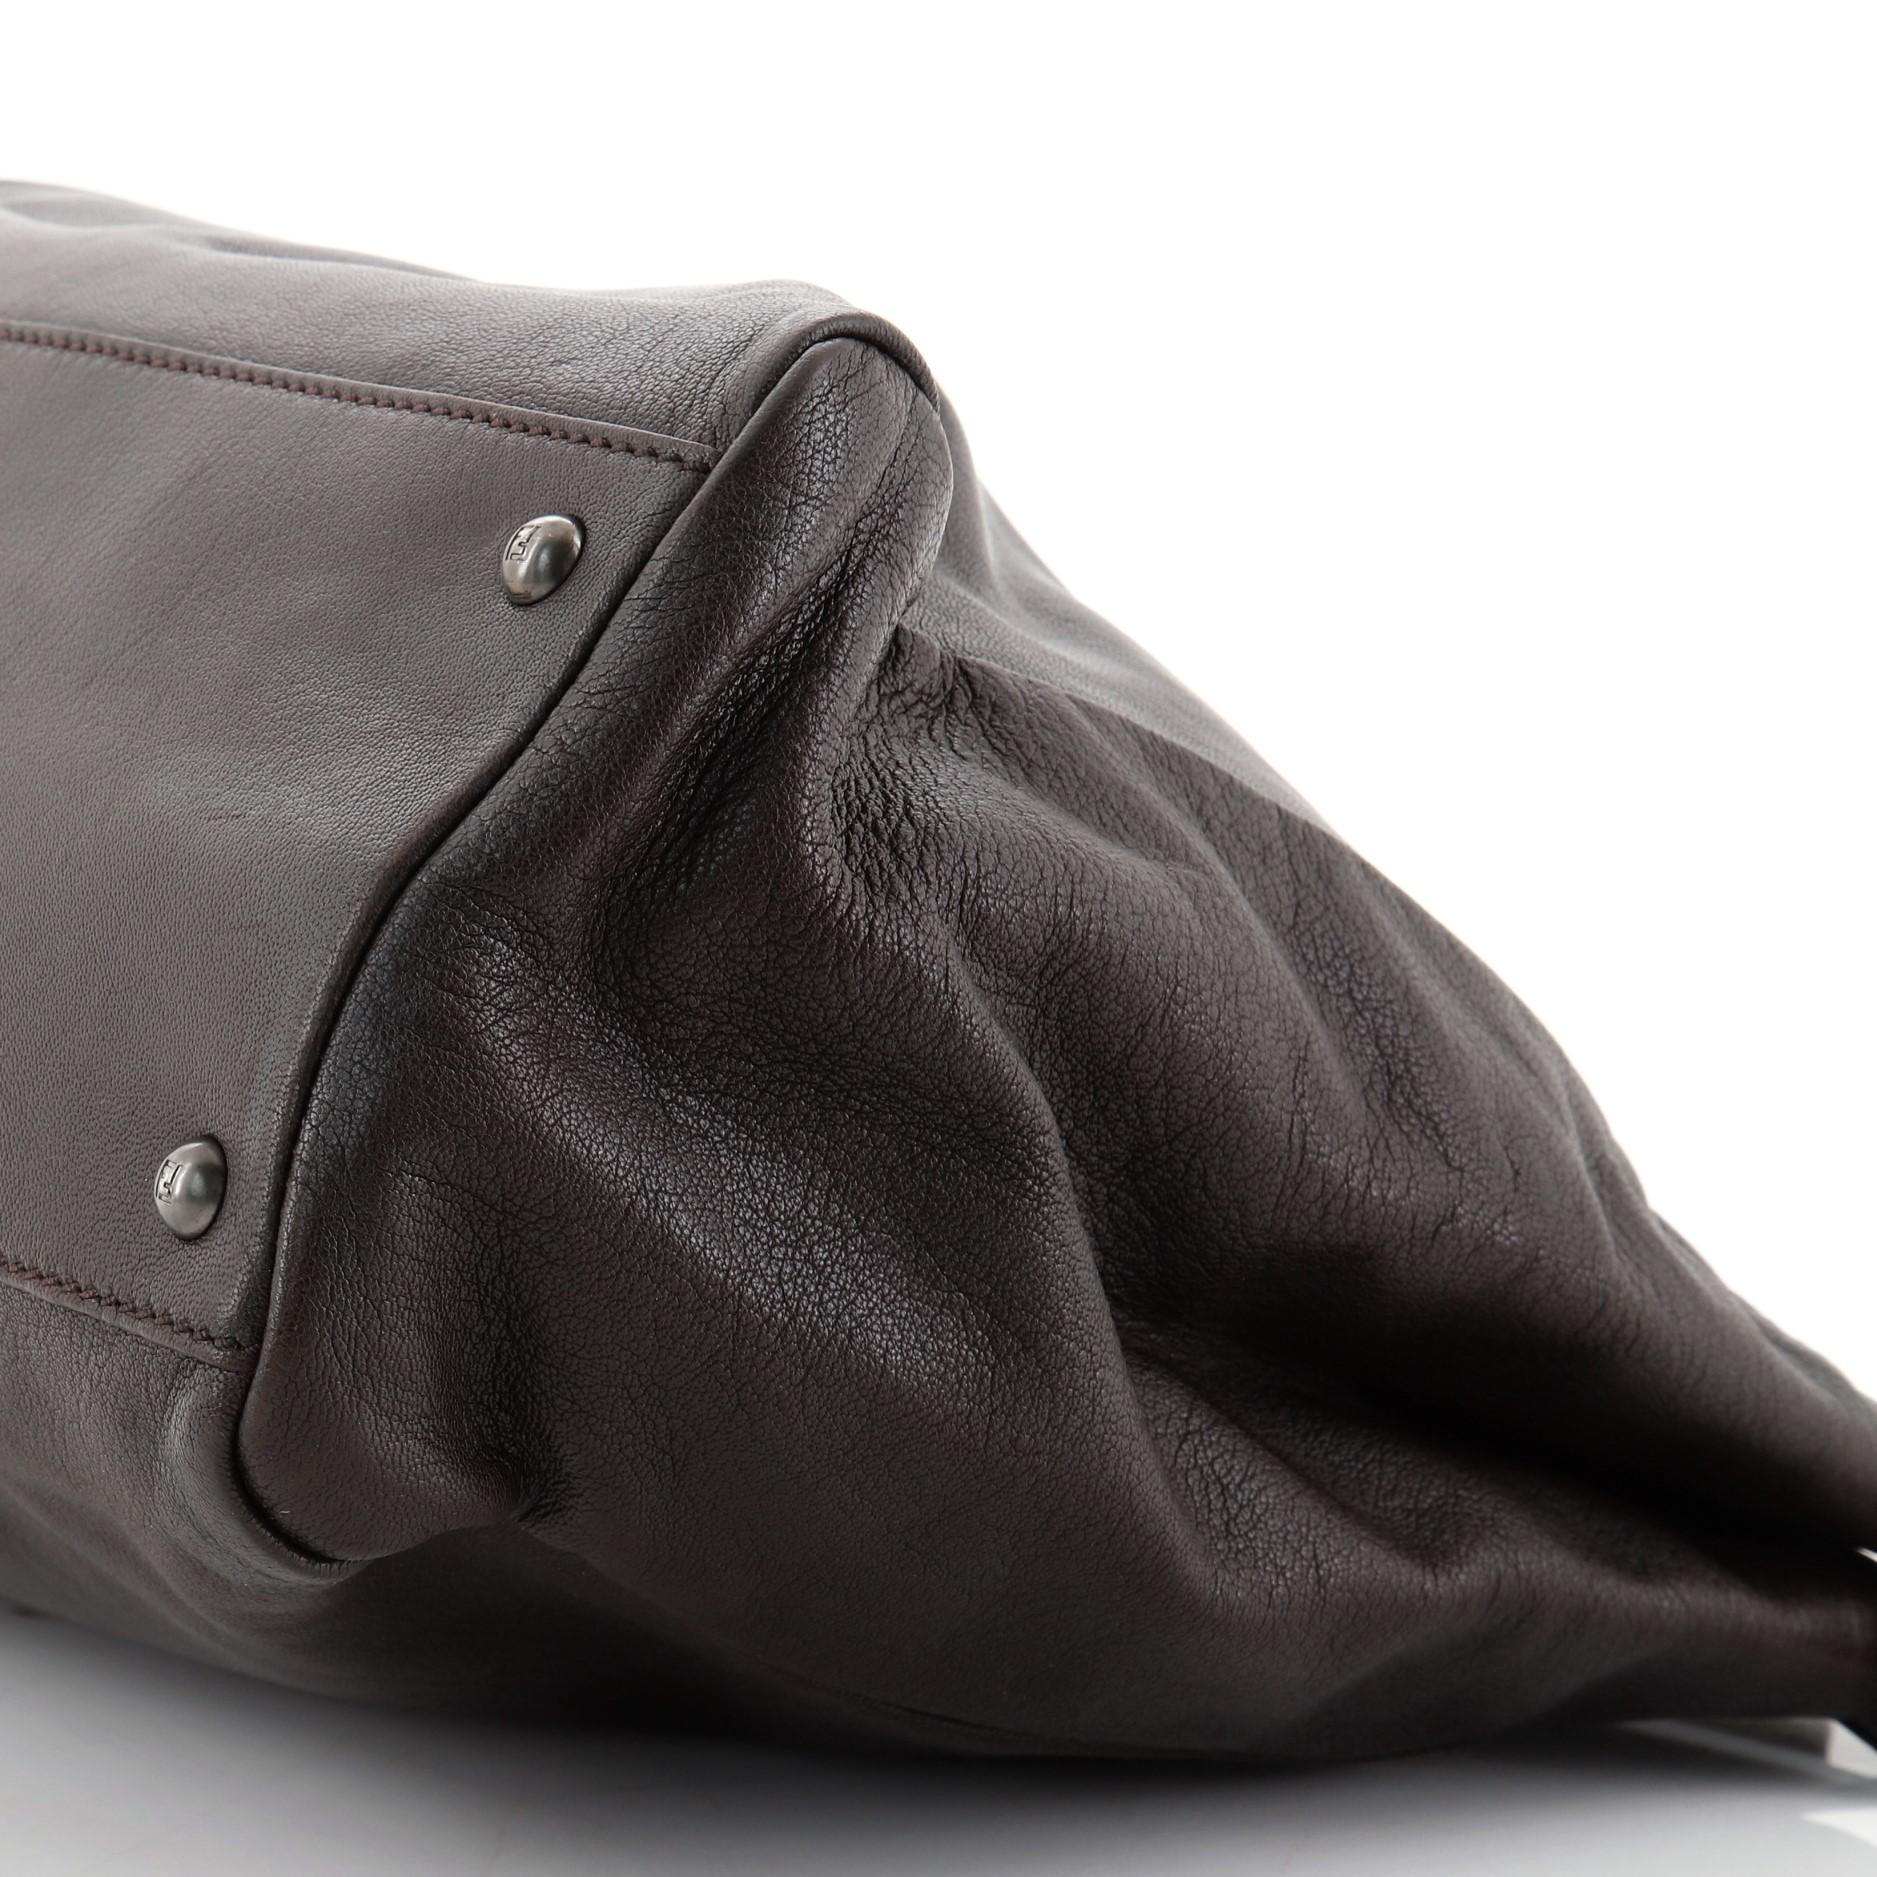 Women's or Men's Fendi Peekaboo Bag Grained Leather Large